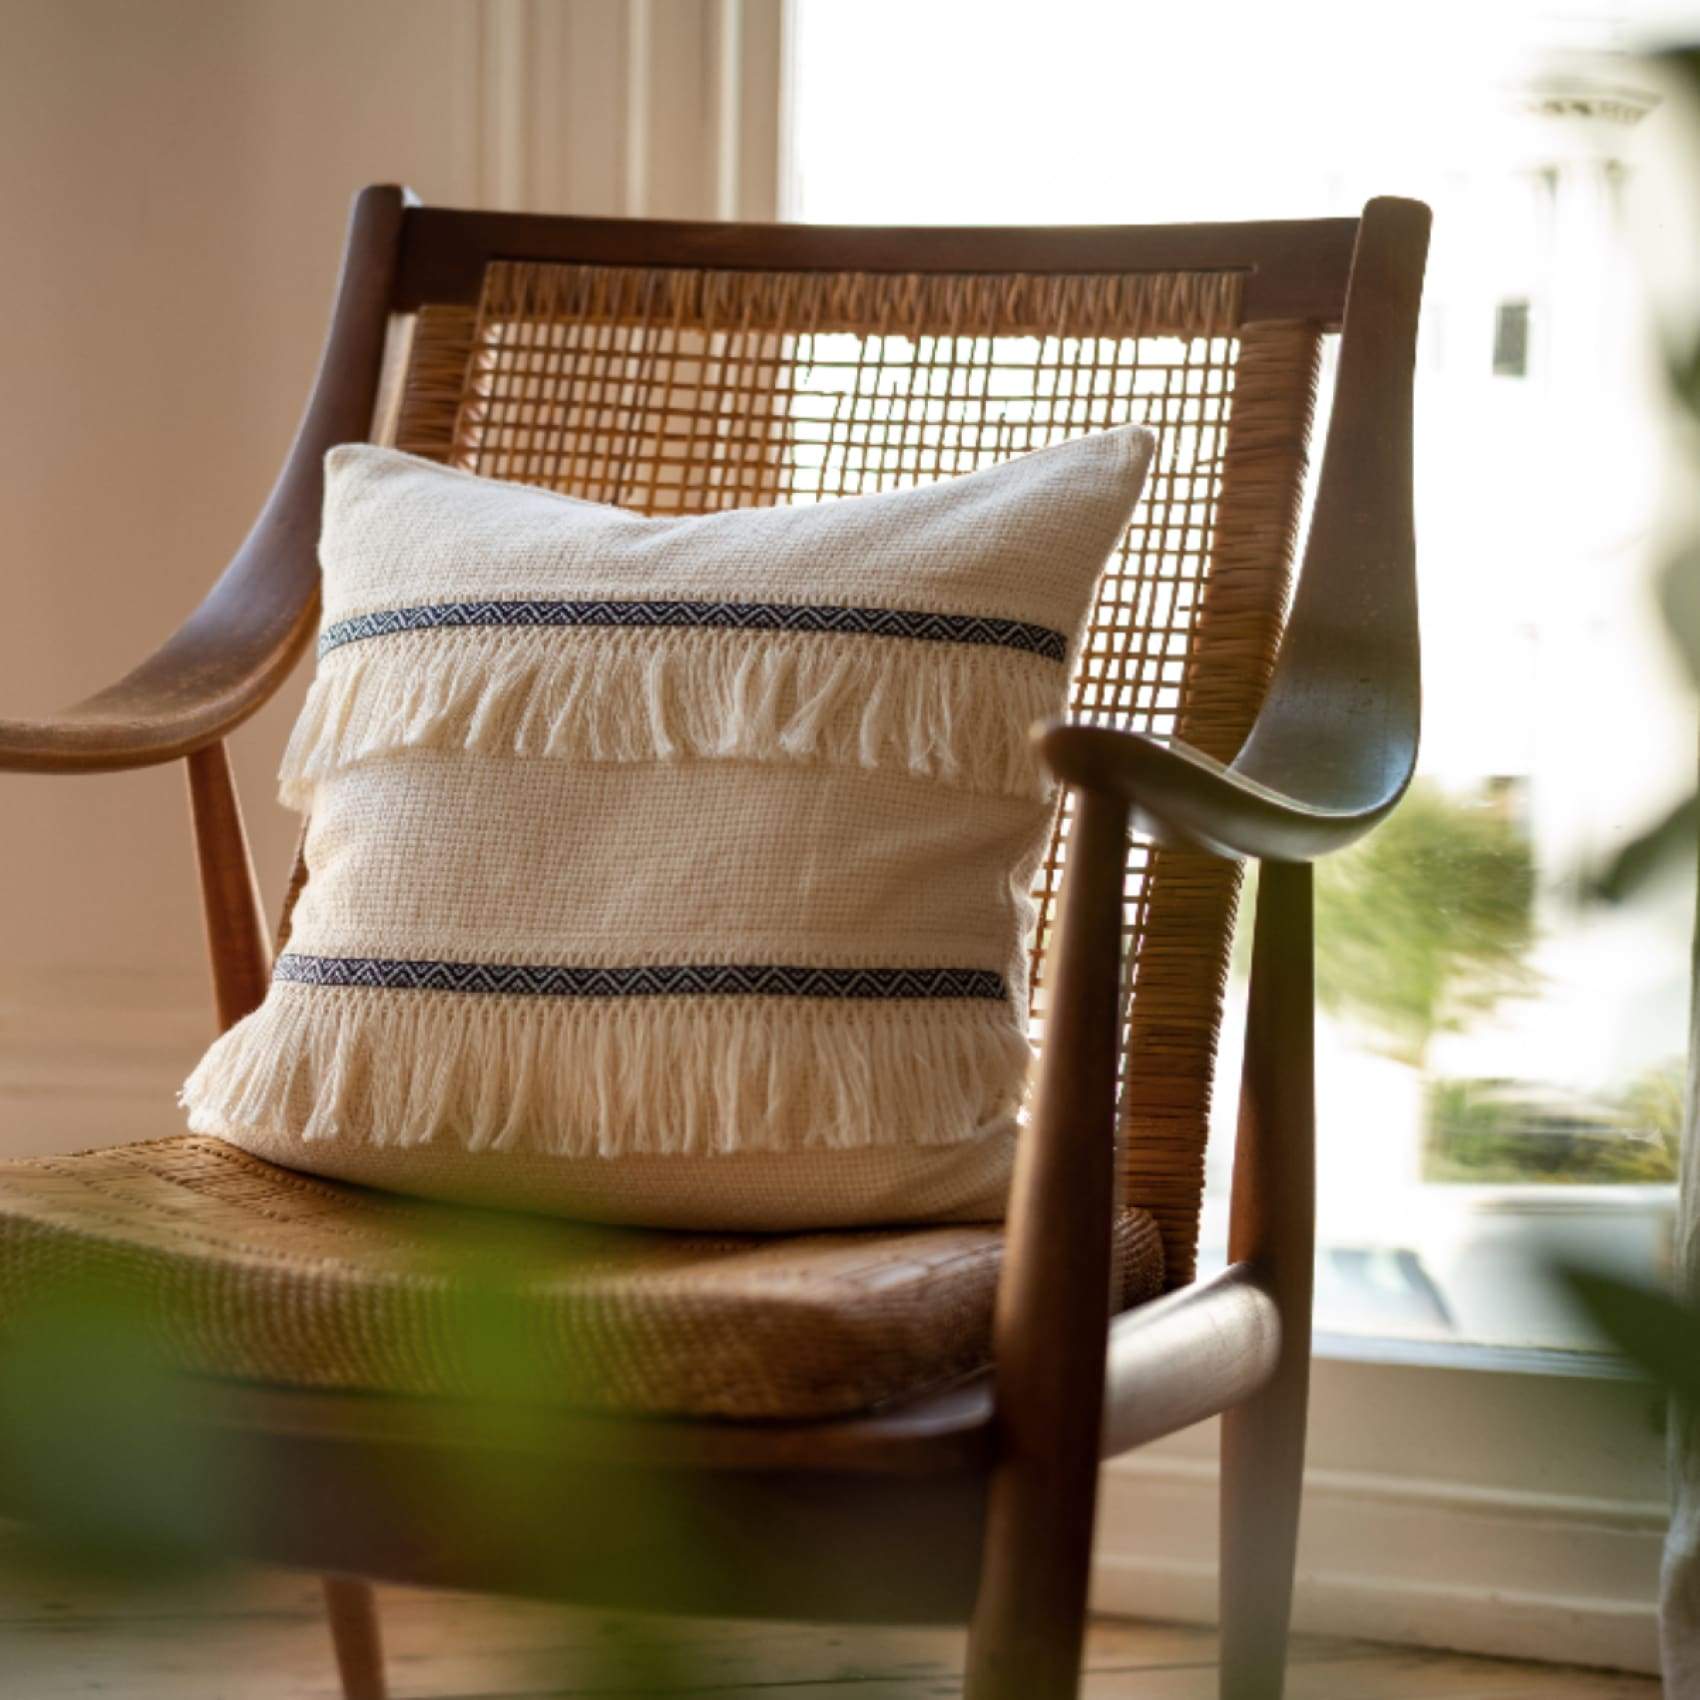 bohem-cushion-bedroom-cotton-cream-living-room-luks-linen-chair-furniture-pillow-502.jpg